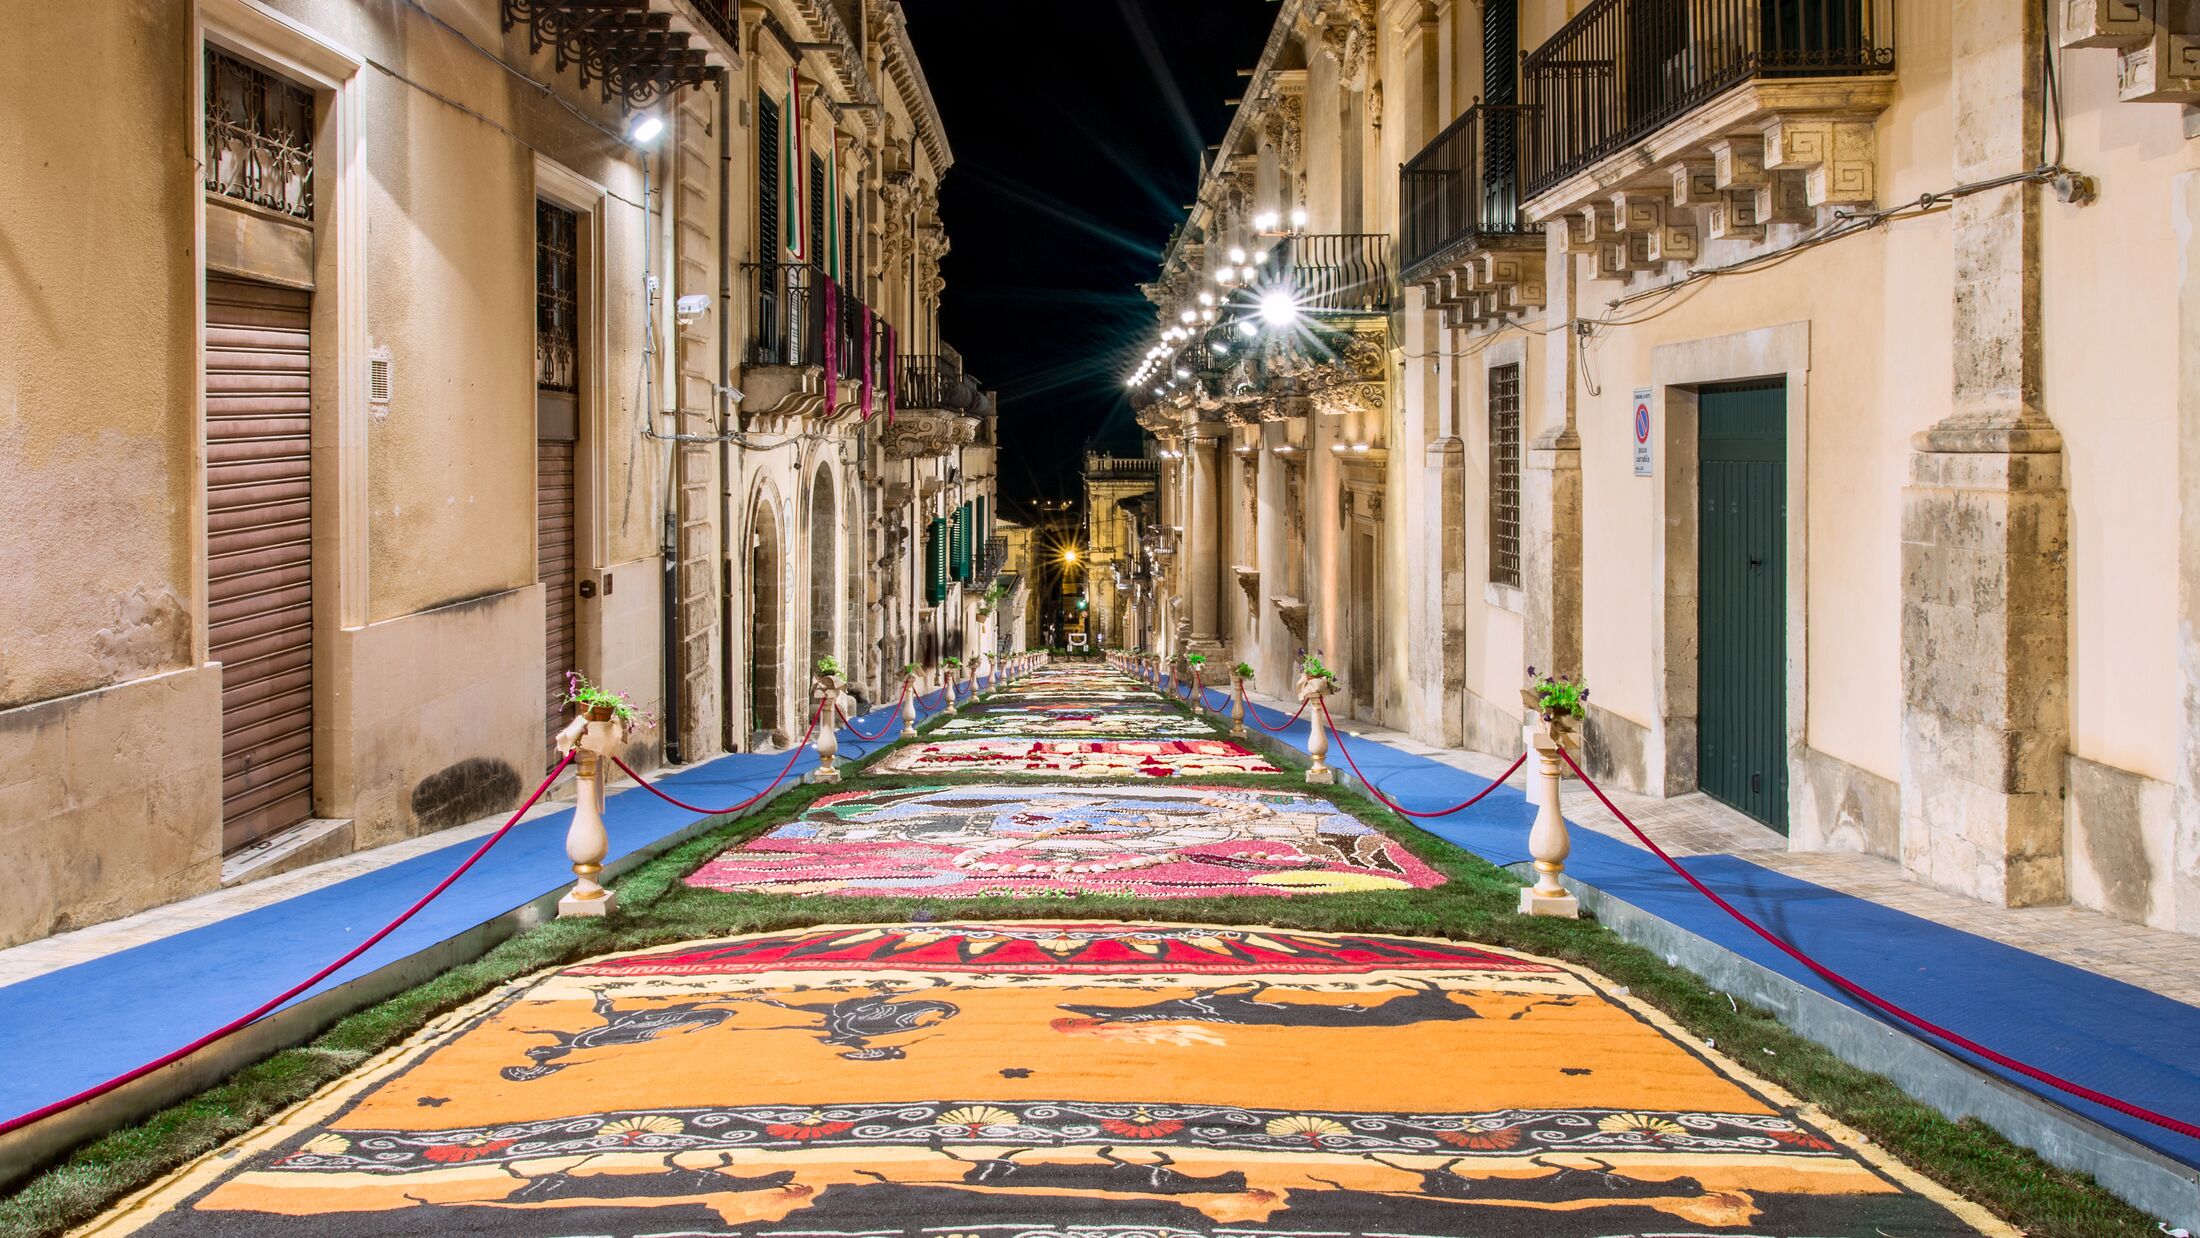 The Flower Festival of Noto in Sicily